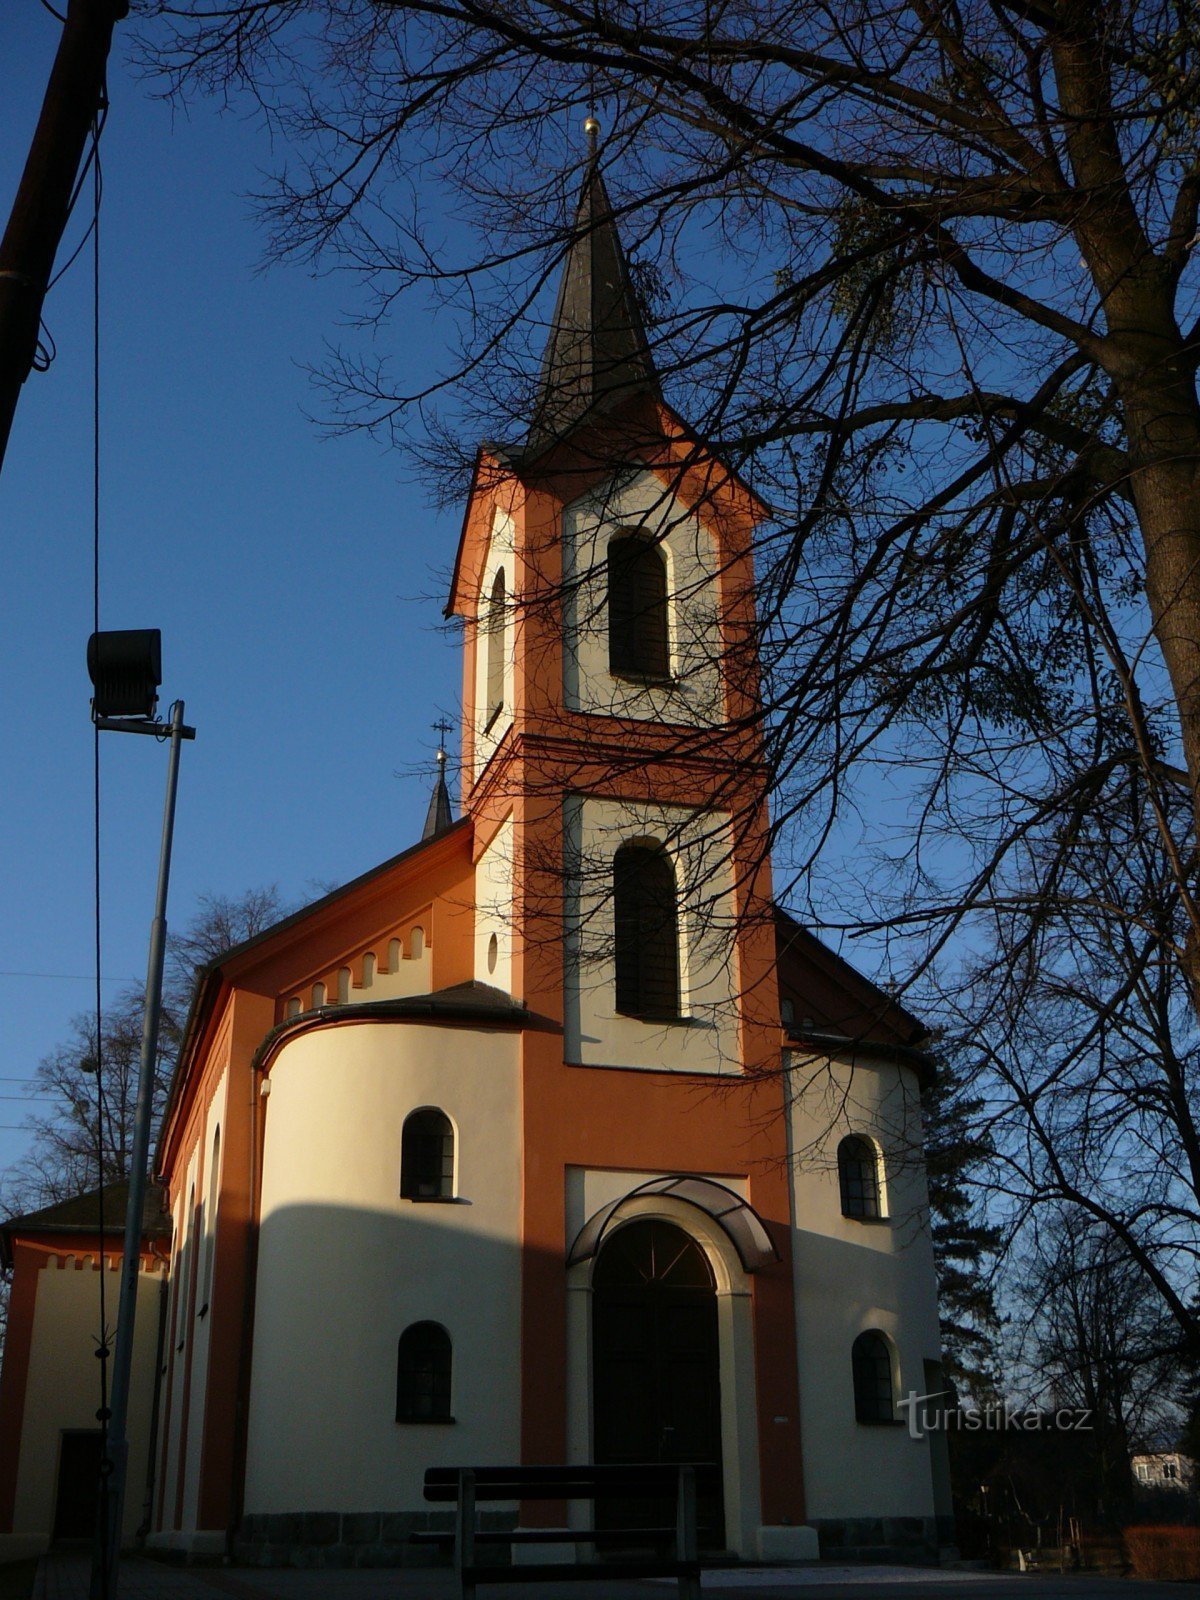 kapel van St. John van Nepomuk in Sviadnov